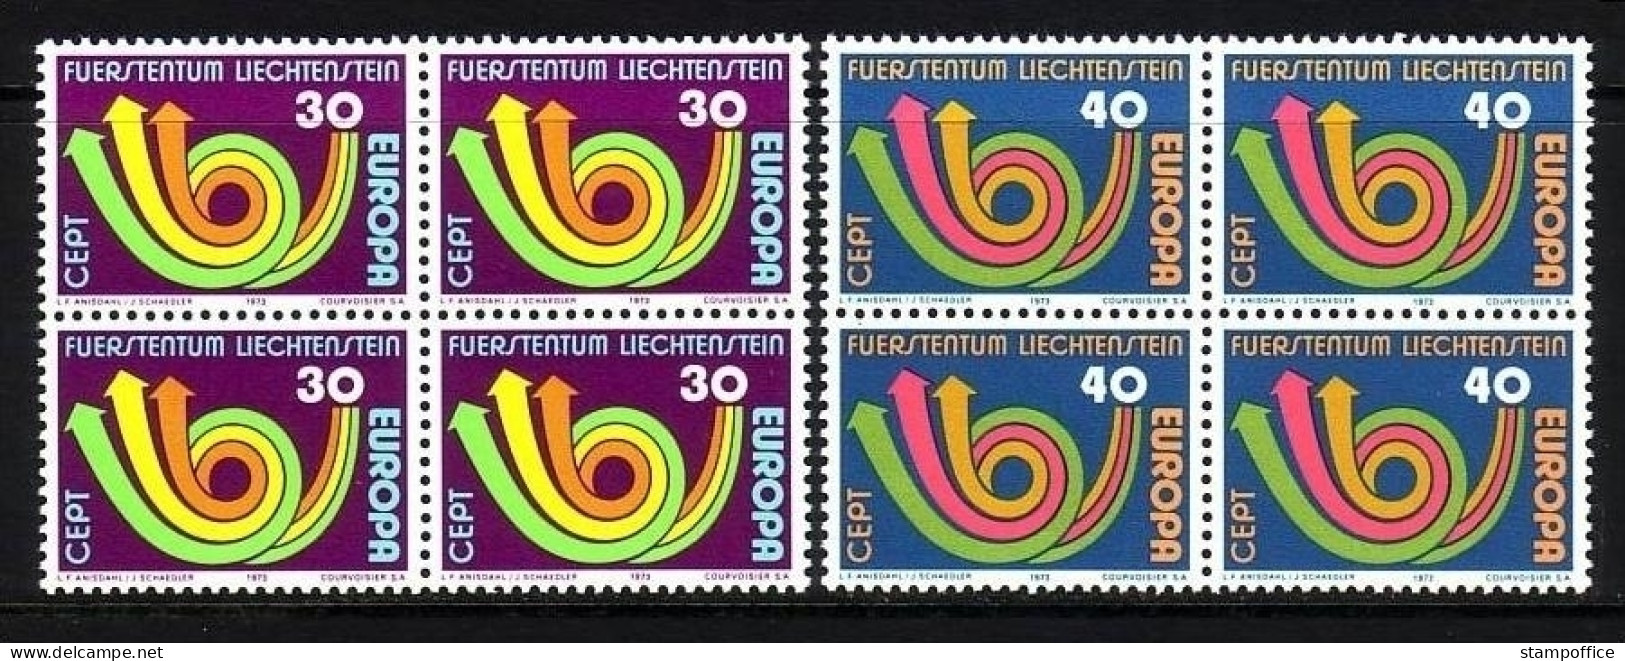 LIECHTENSTEIN MI-NR. 579-580 POSTFRISCH(MINT) 4er Block EUROPA 1973 POSTHORN - 1973